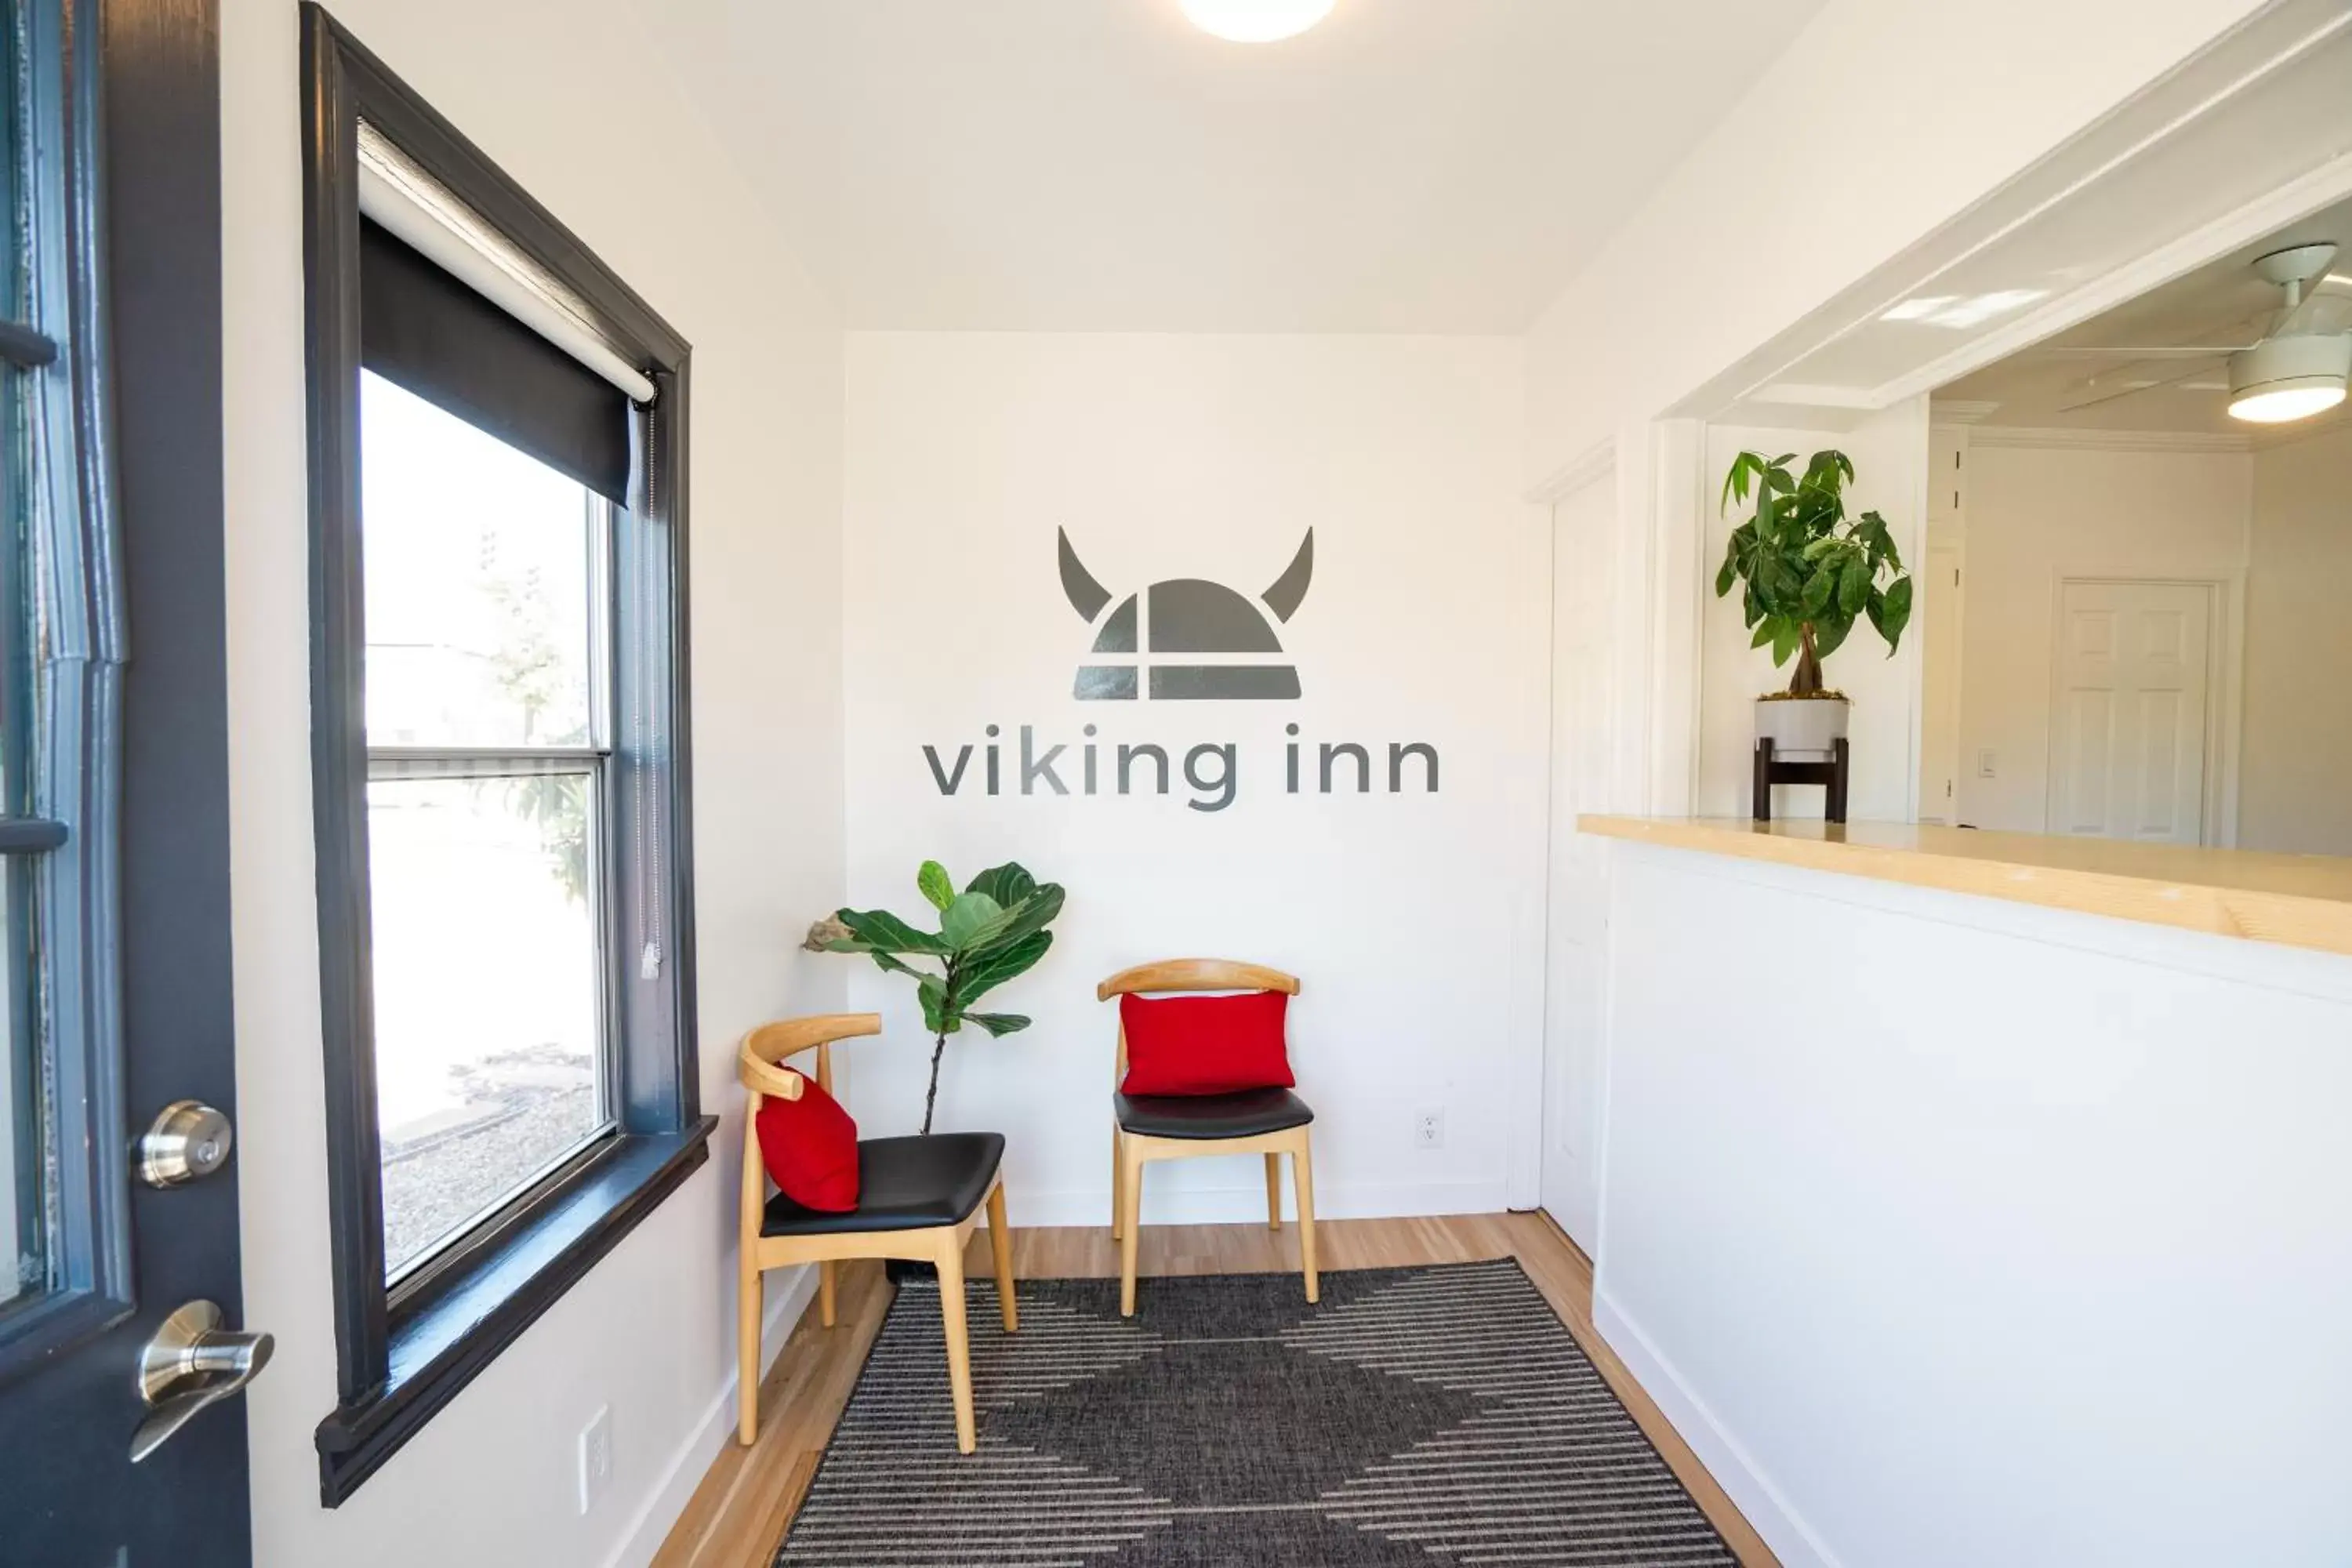 Lobby or reception in Viking Inn